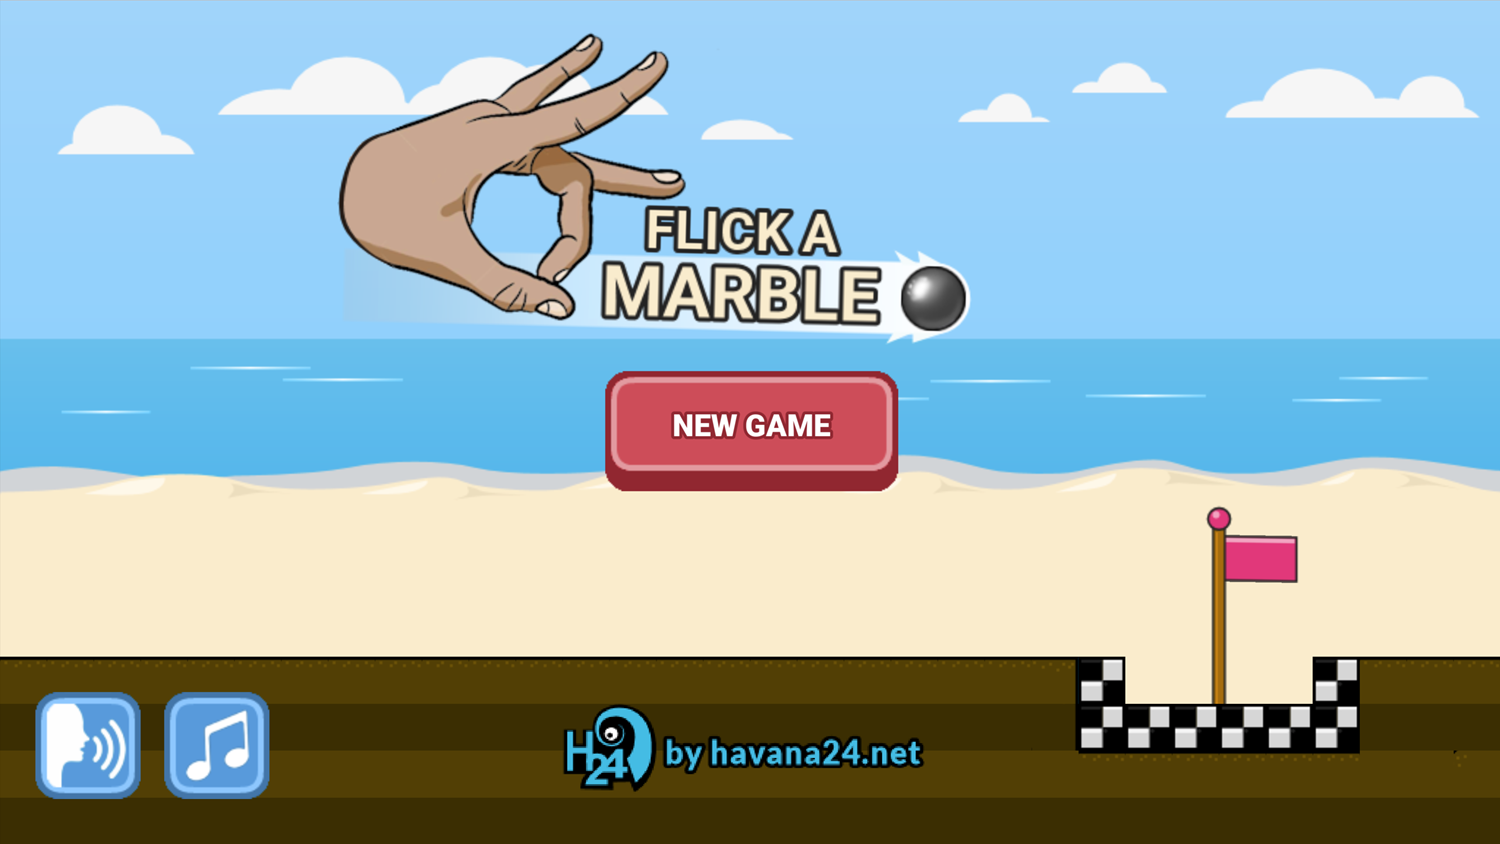 Flick a Marble Game Welcome Screen Screenshot.